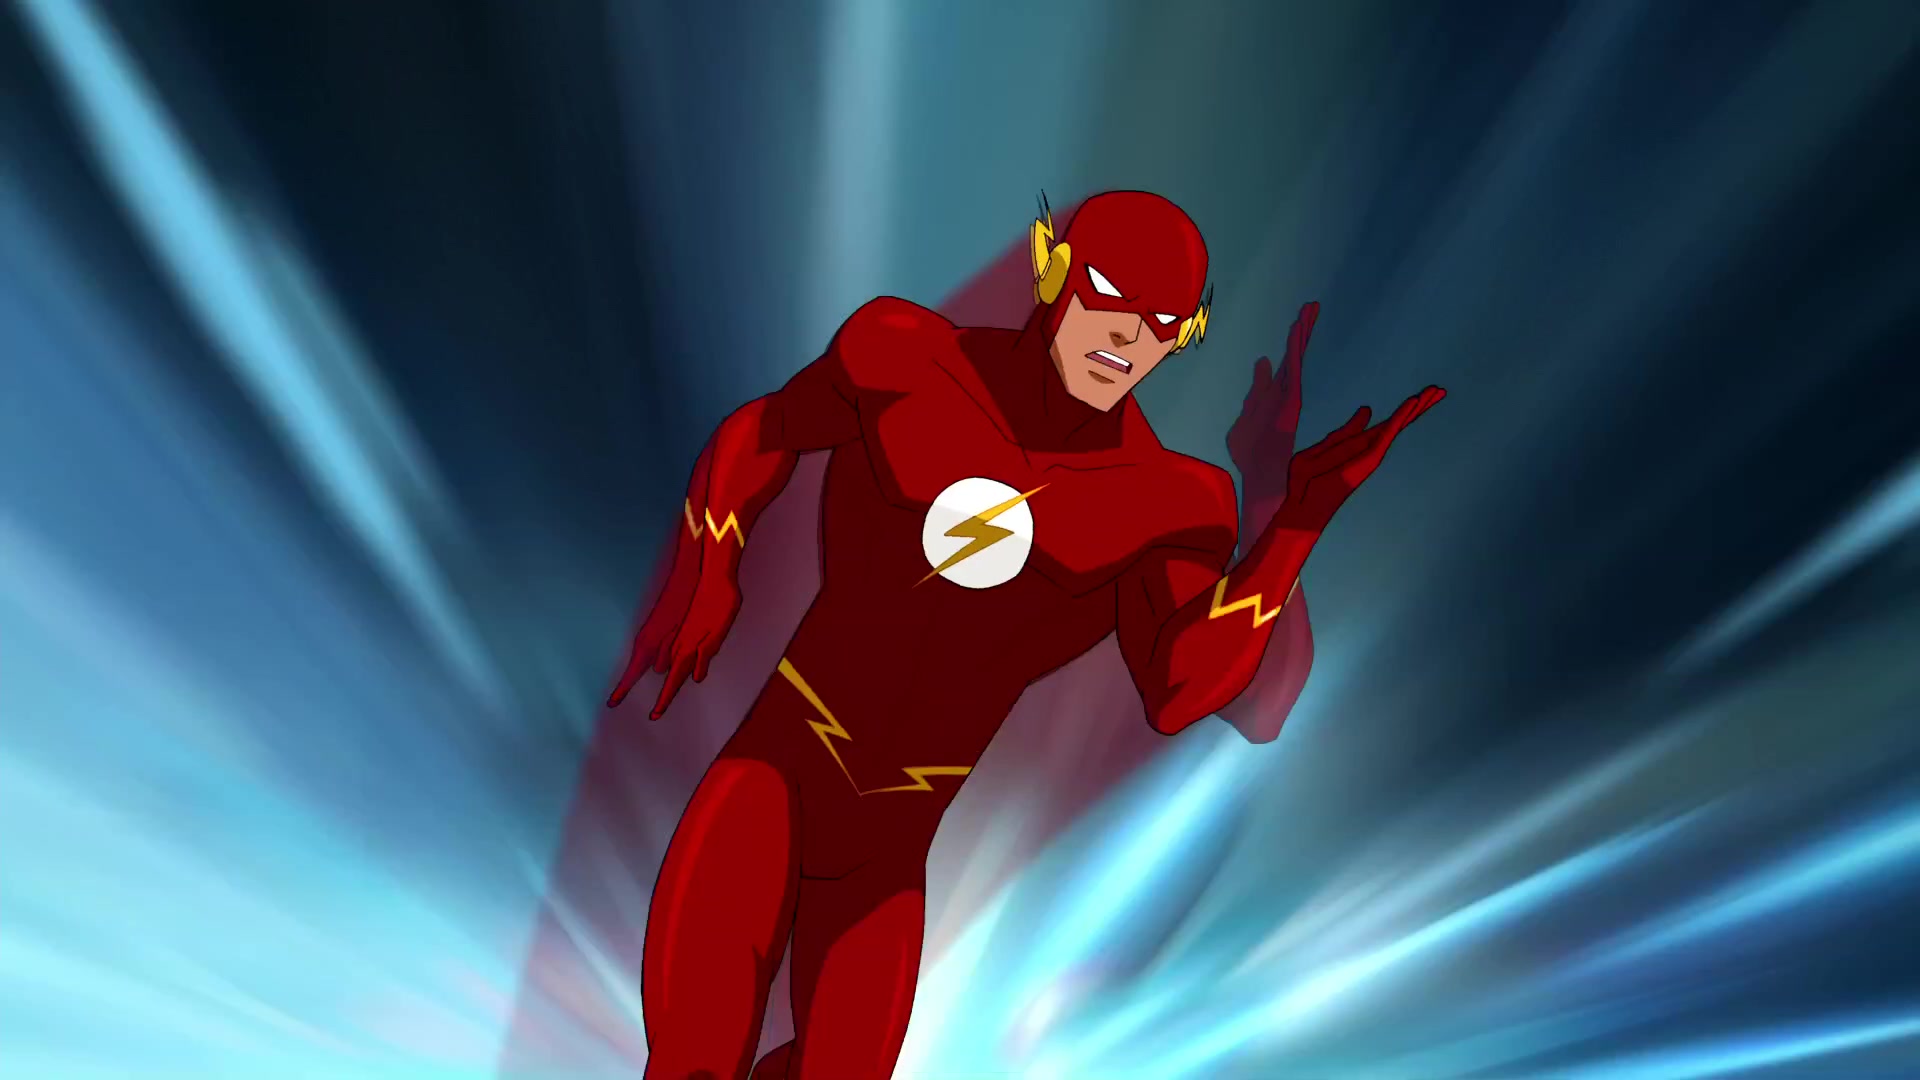 Hidden flash. Flash Супергерой. Флэш бег. Флефлеш супер герой. Флеш бежит.